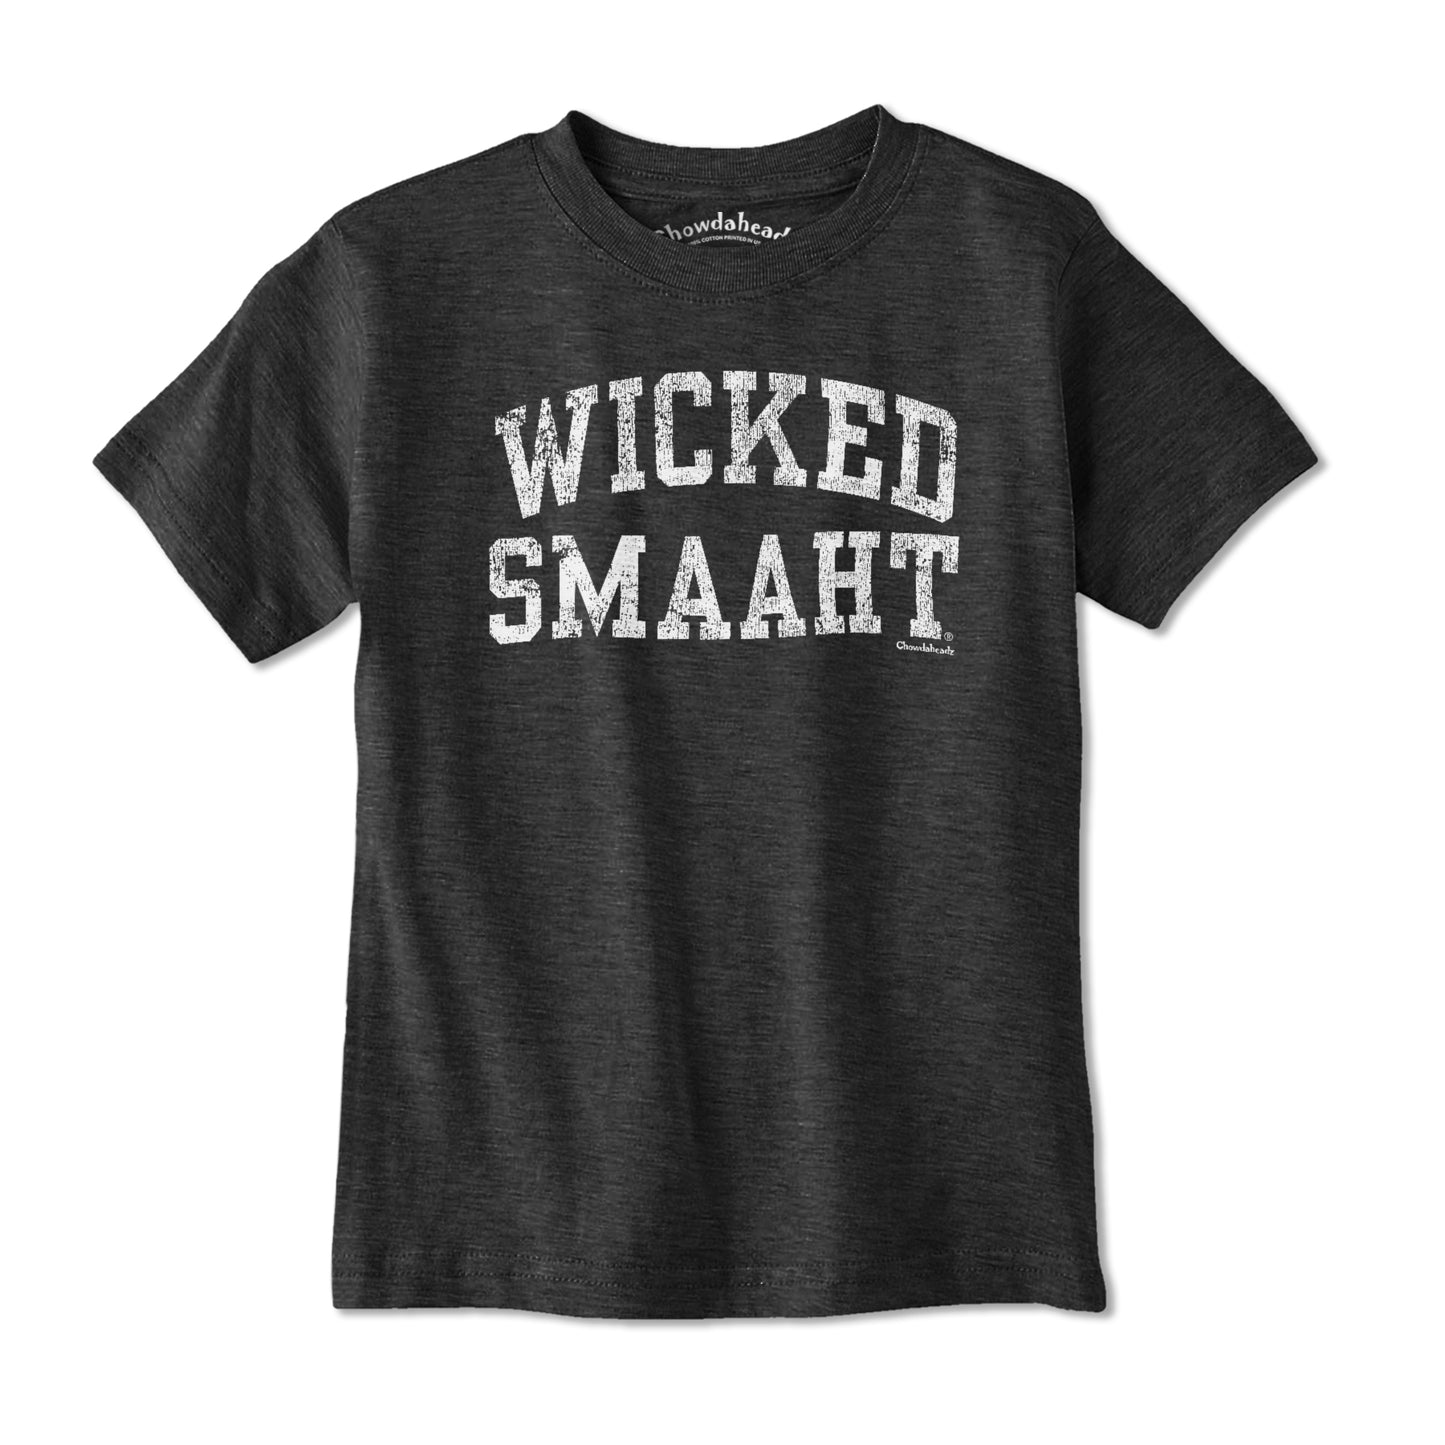 Wicked Smaaht Youth T-Shirt - Chowdaheadz